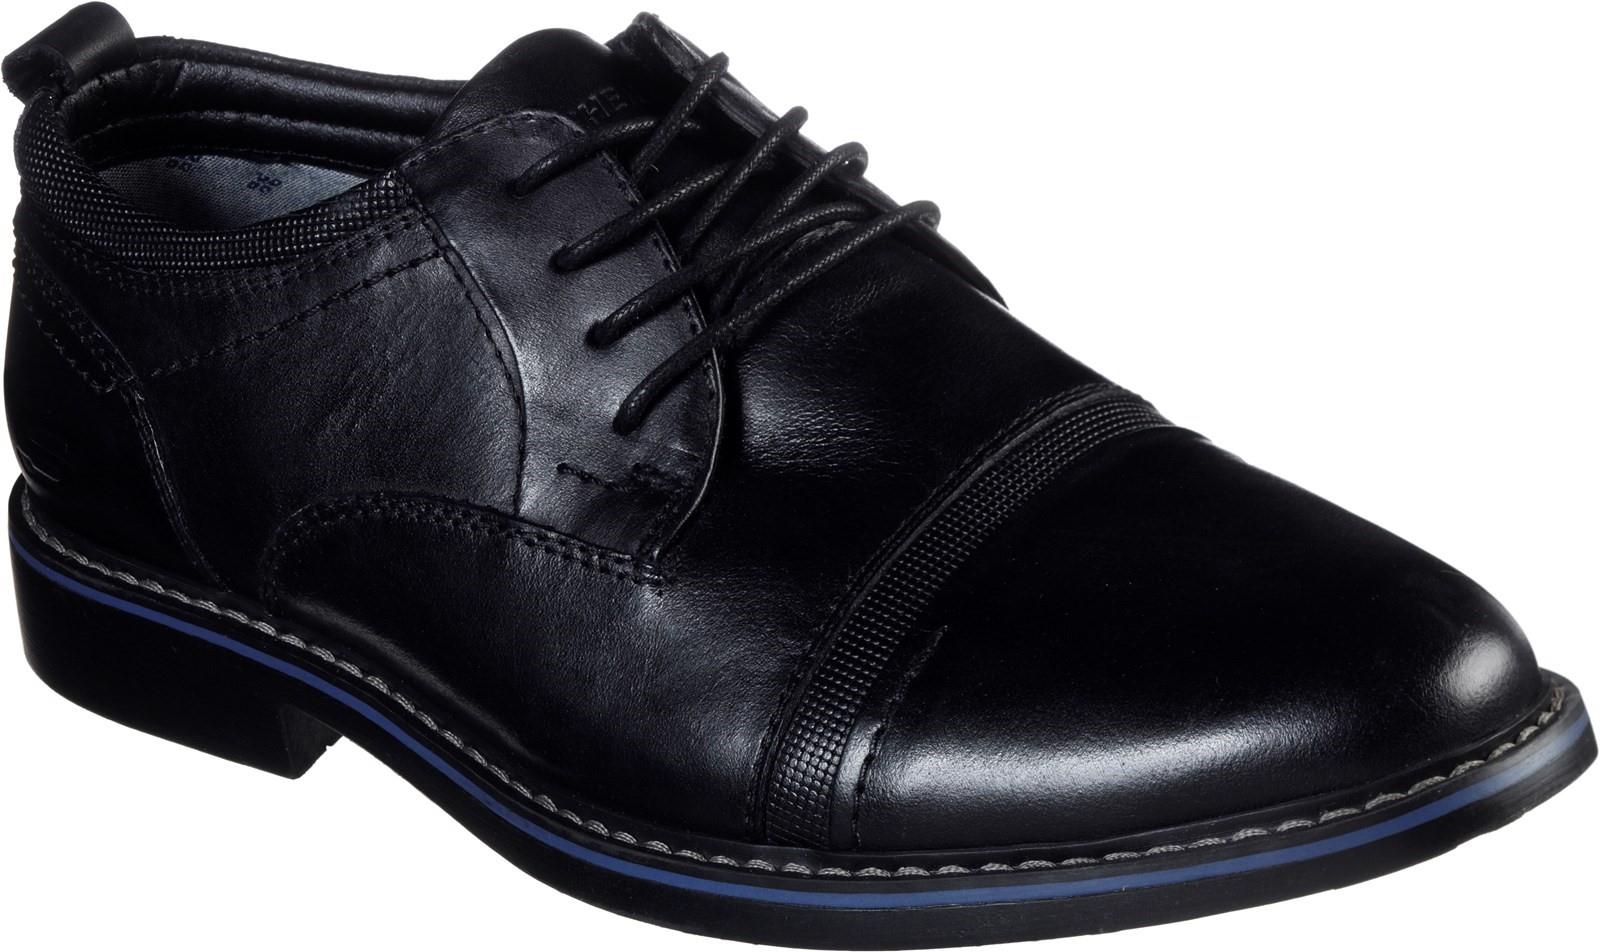 Skechers Bregman Selone black leather memory foam smart formal Oxford shoes